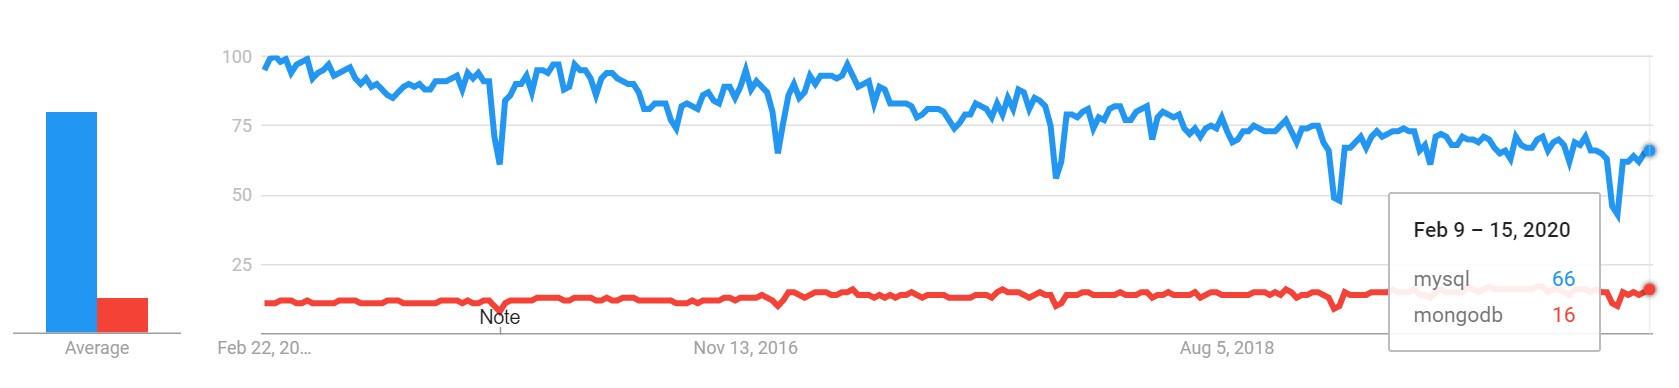 MySQL is more popular than MongoDB